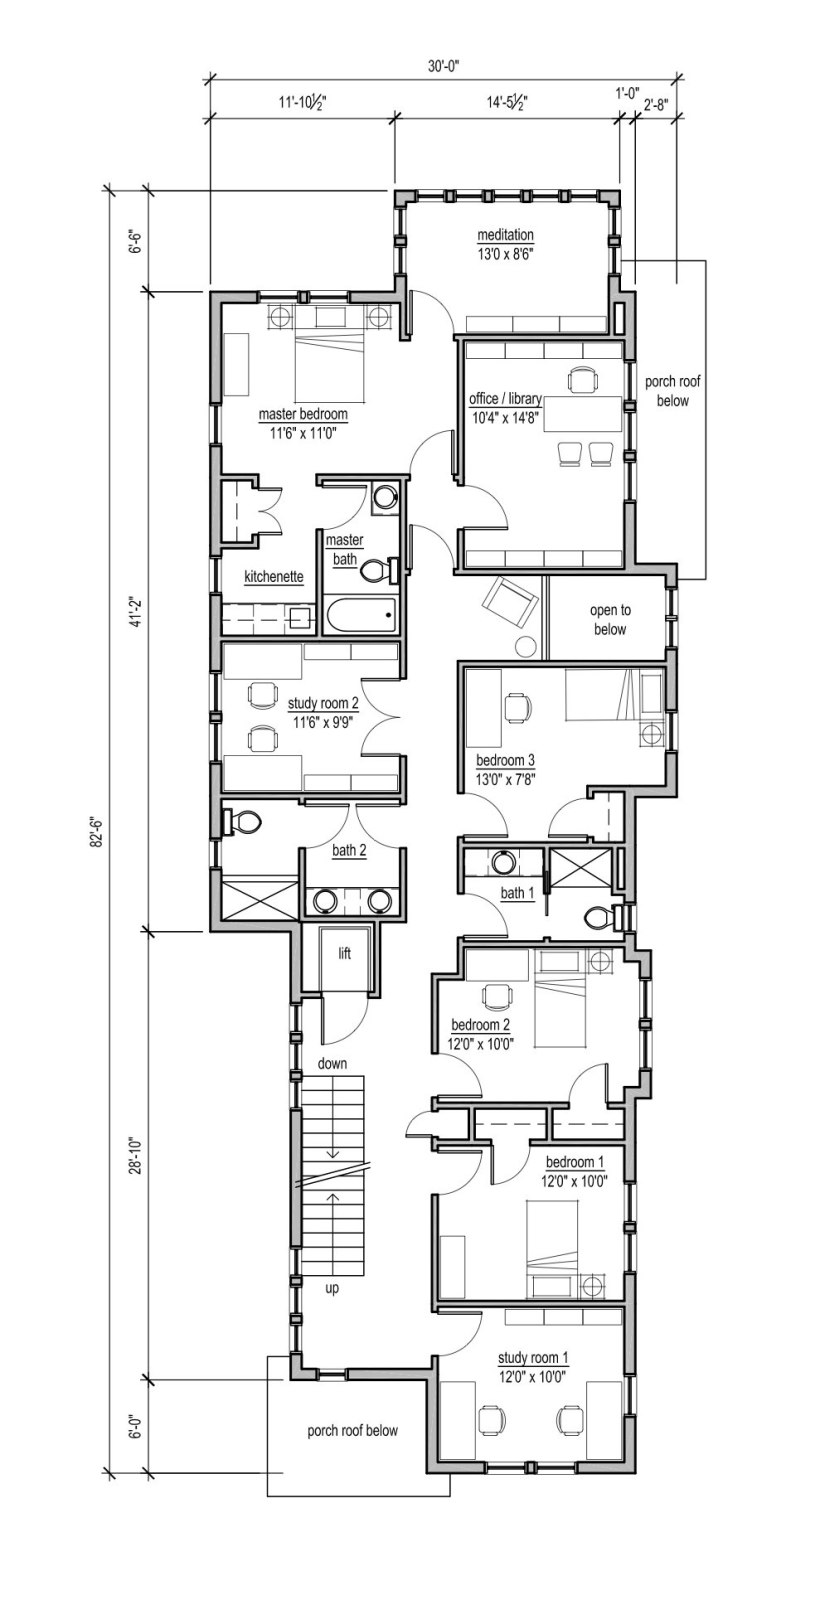 hermitage_second_floor_plan